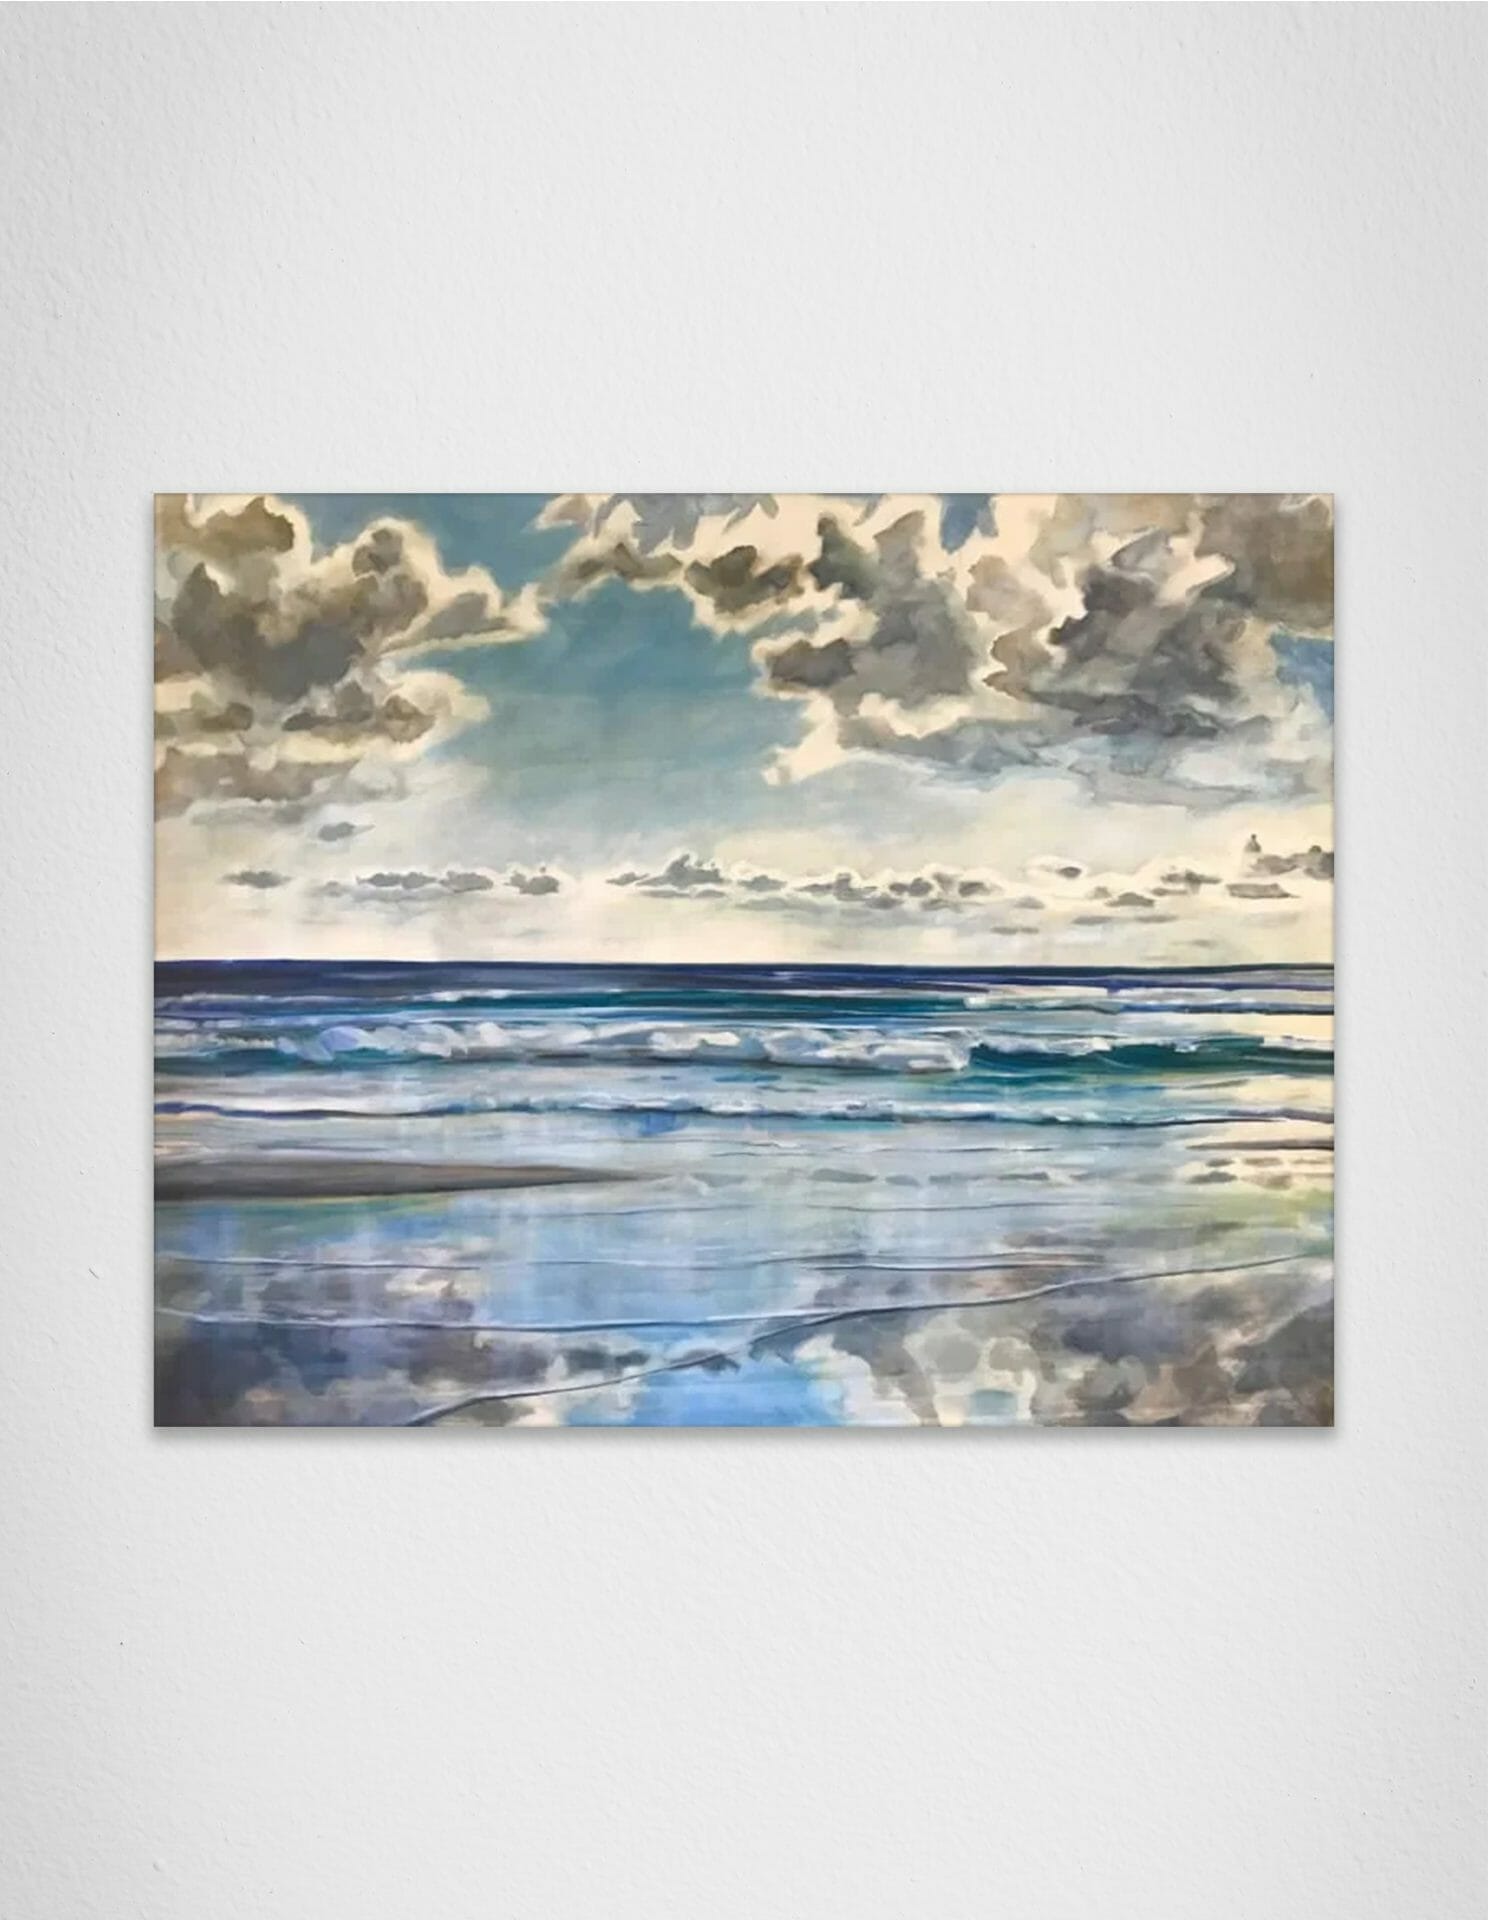 Pacific Beach Rosanna Marmont ArtMatch 723x572 1 painting mockup